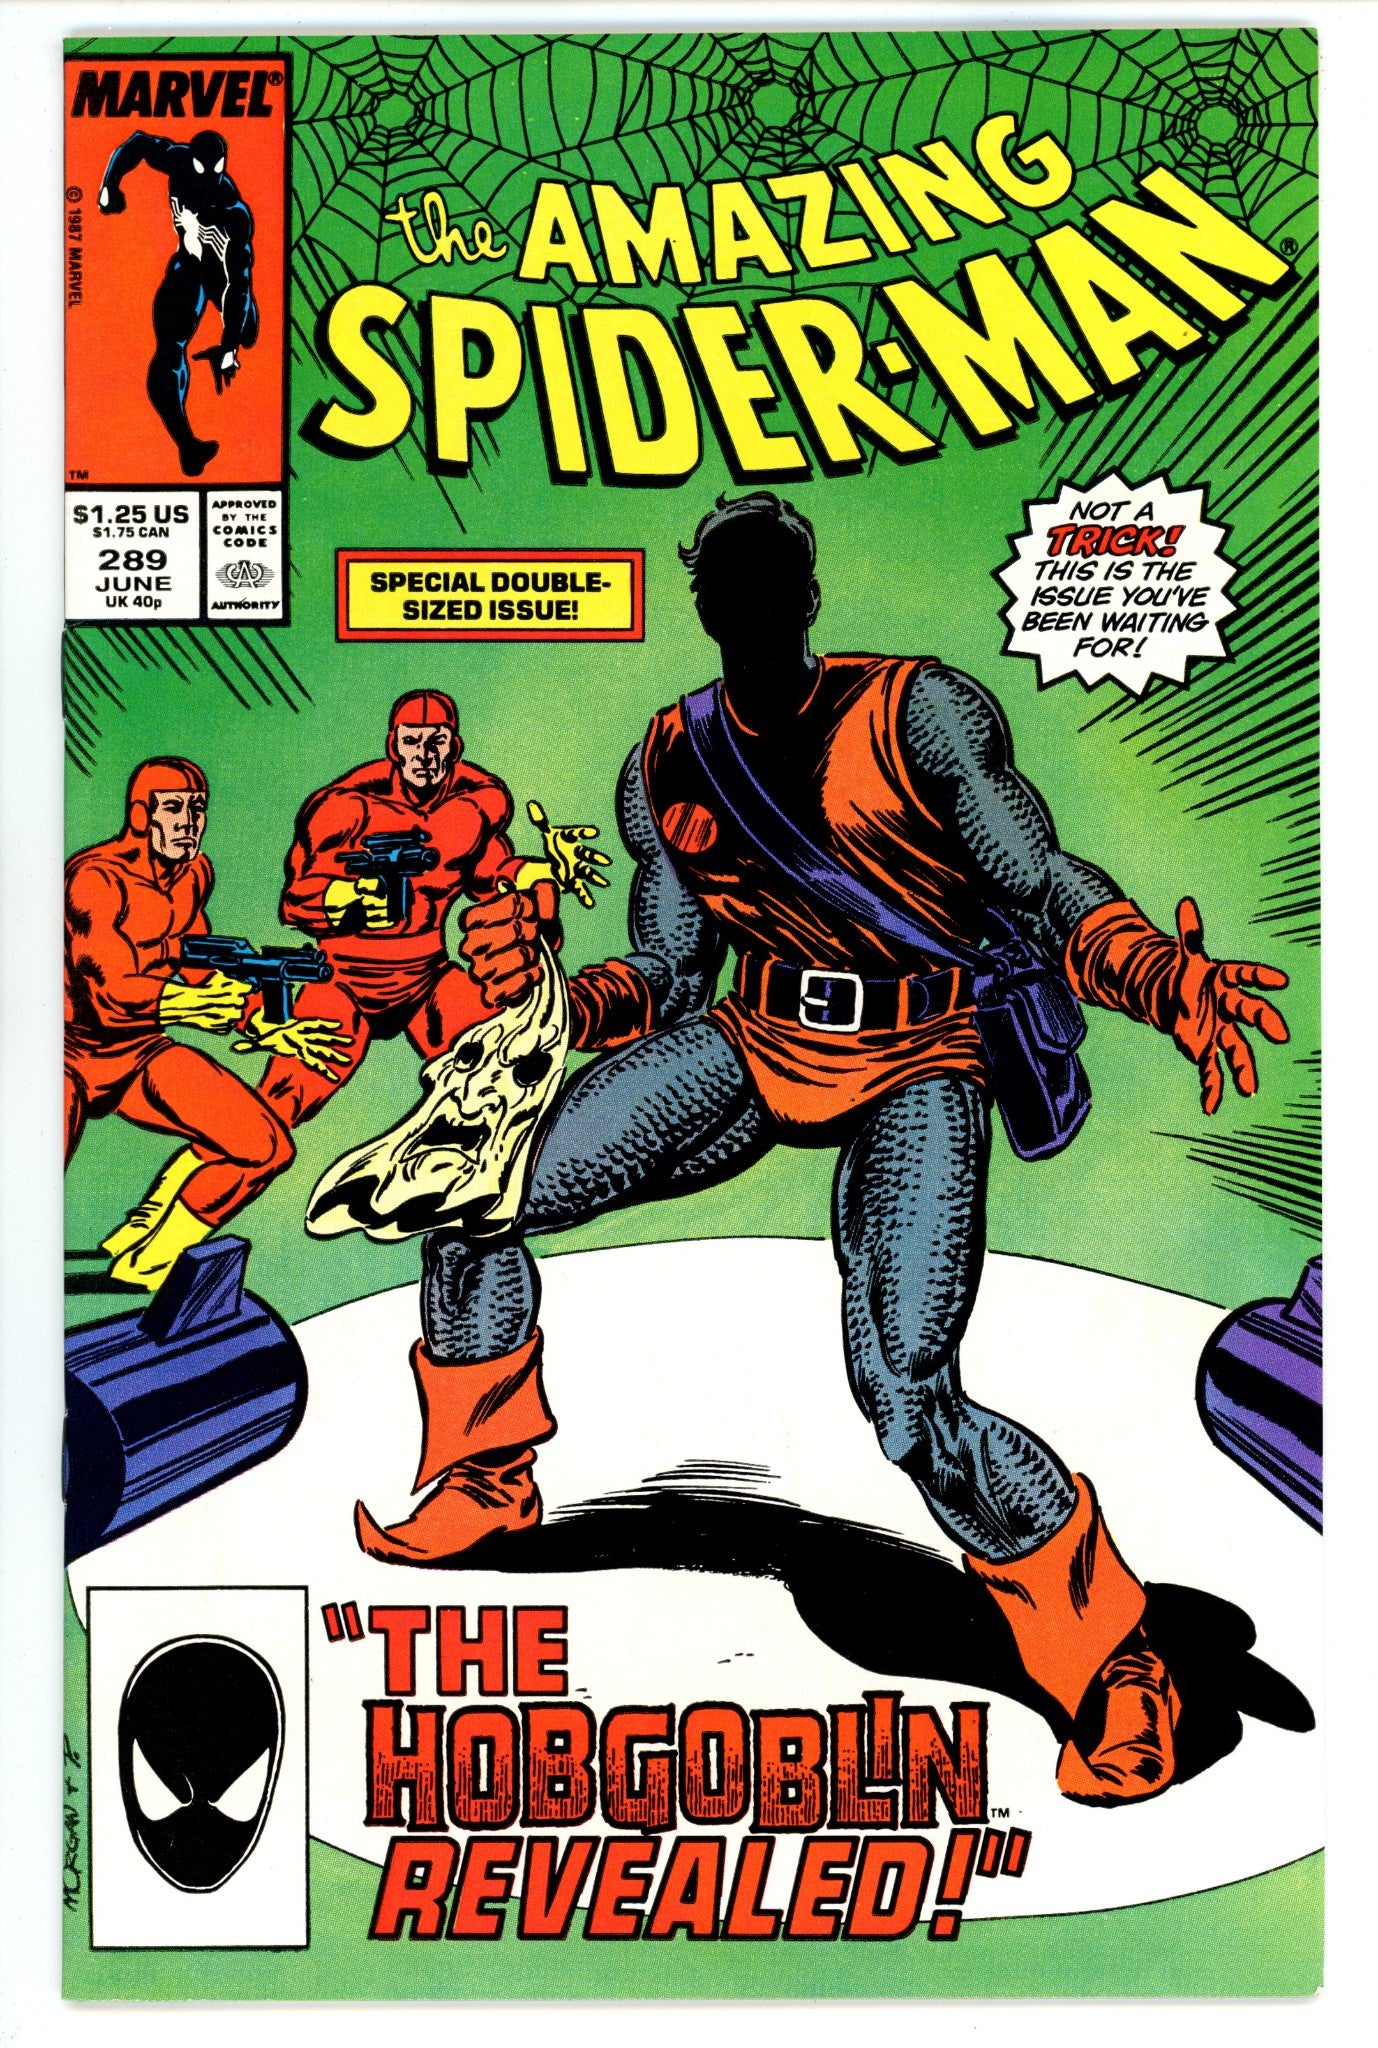 The Amazing Spider-Man Vol 1 289 VF+ (8.5) (1987) 